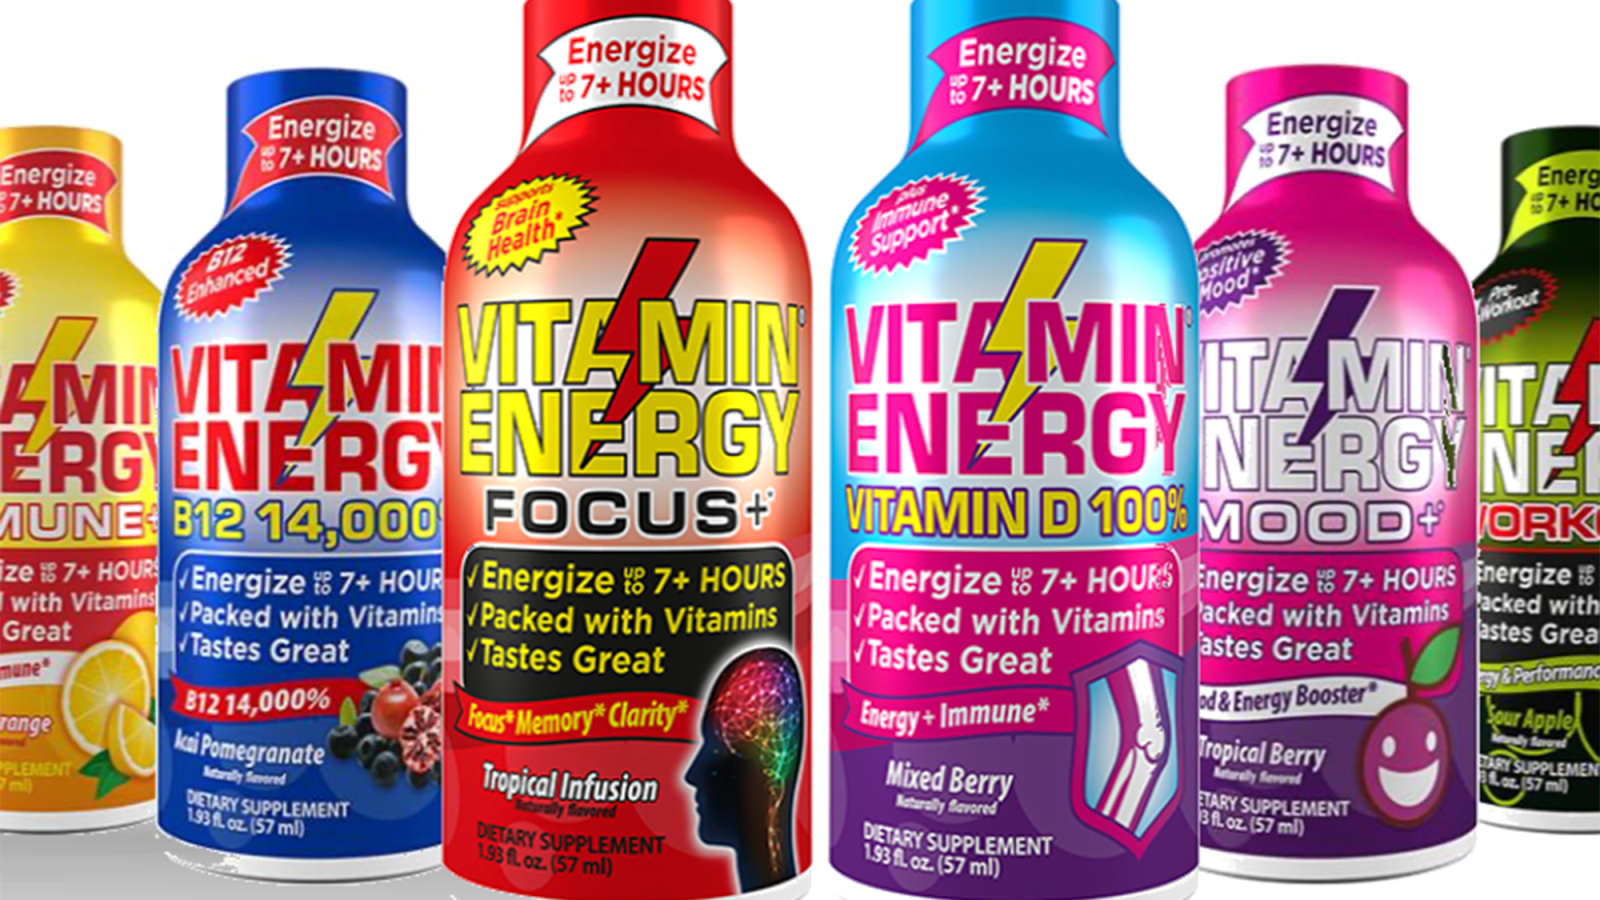 Vitamin Energy shots